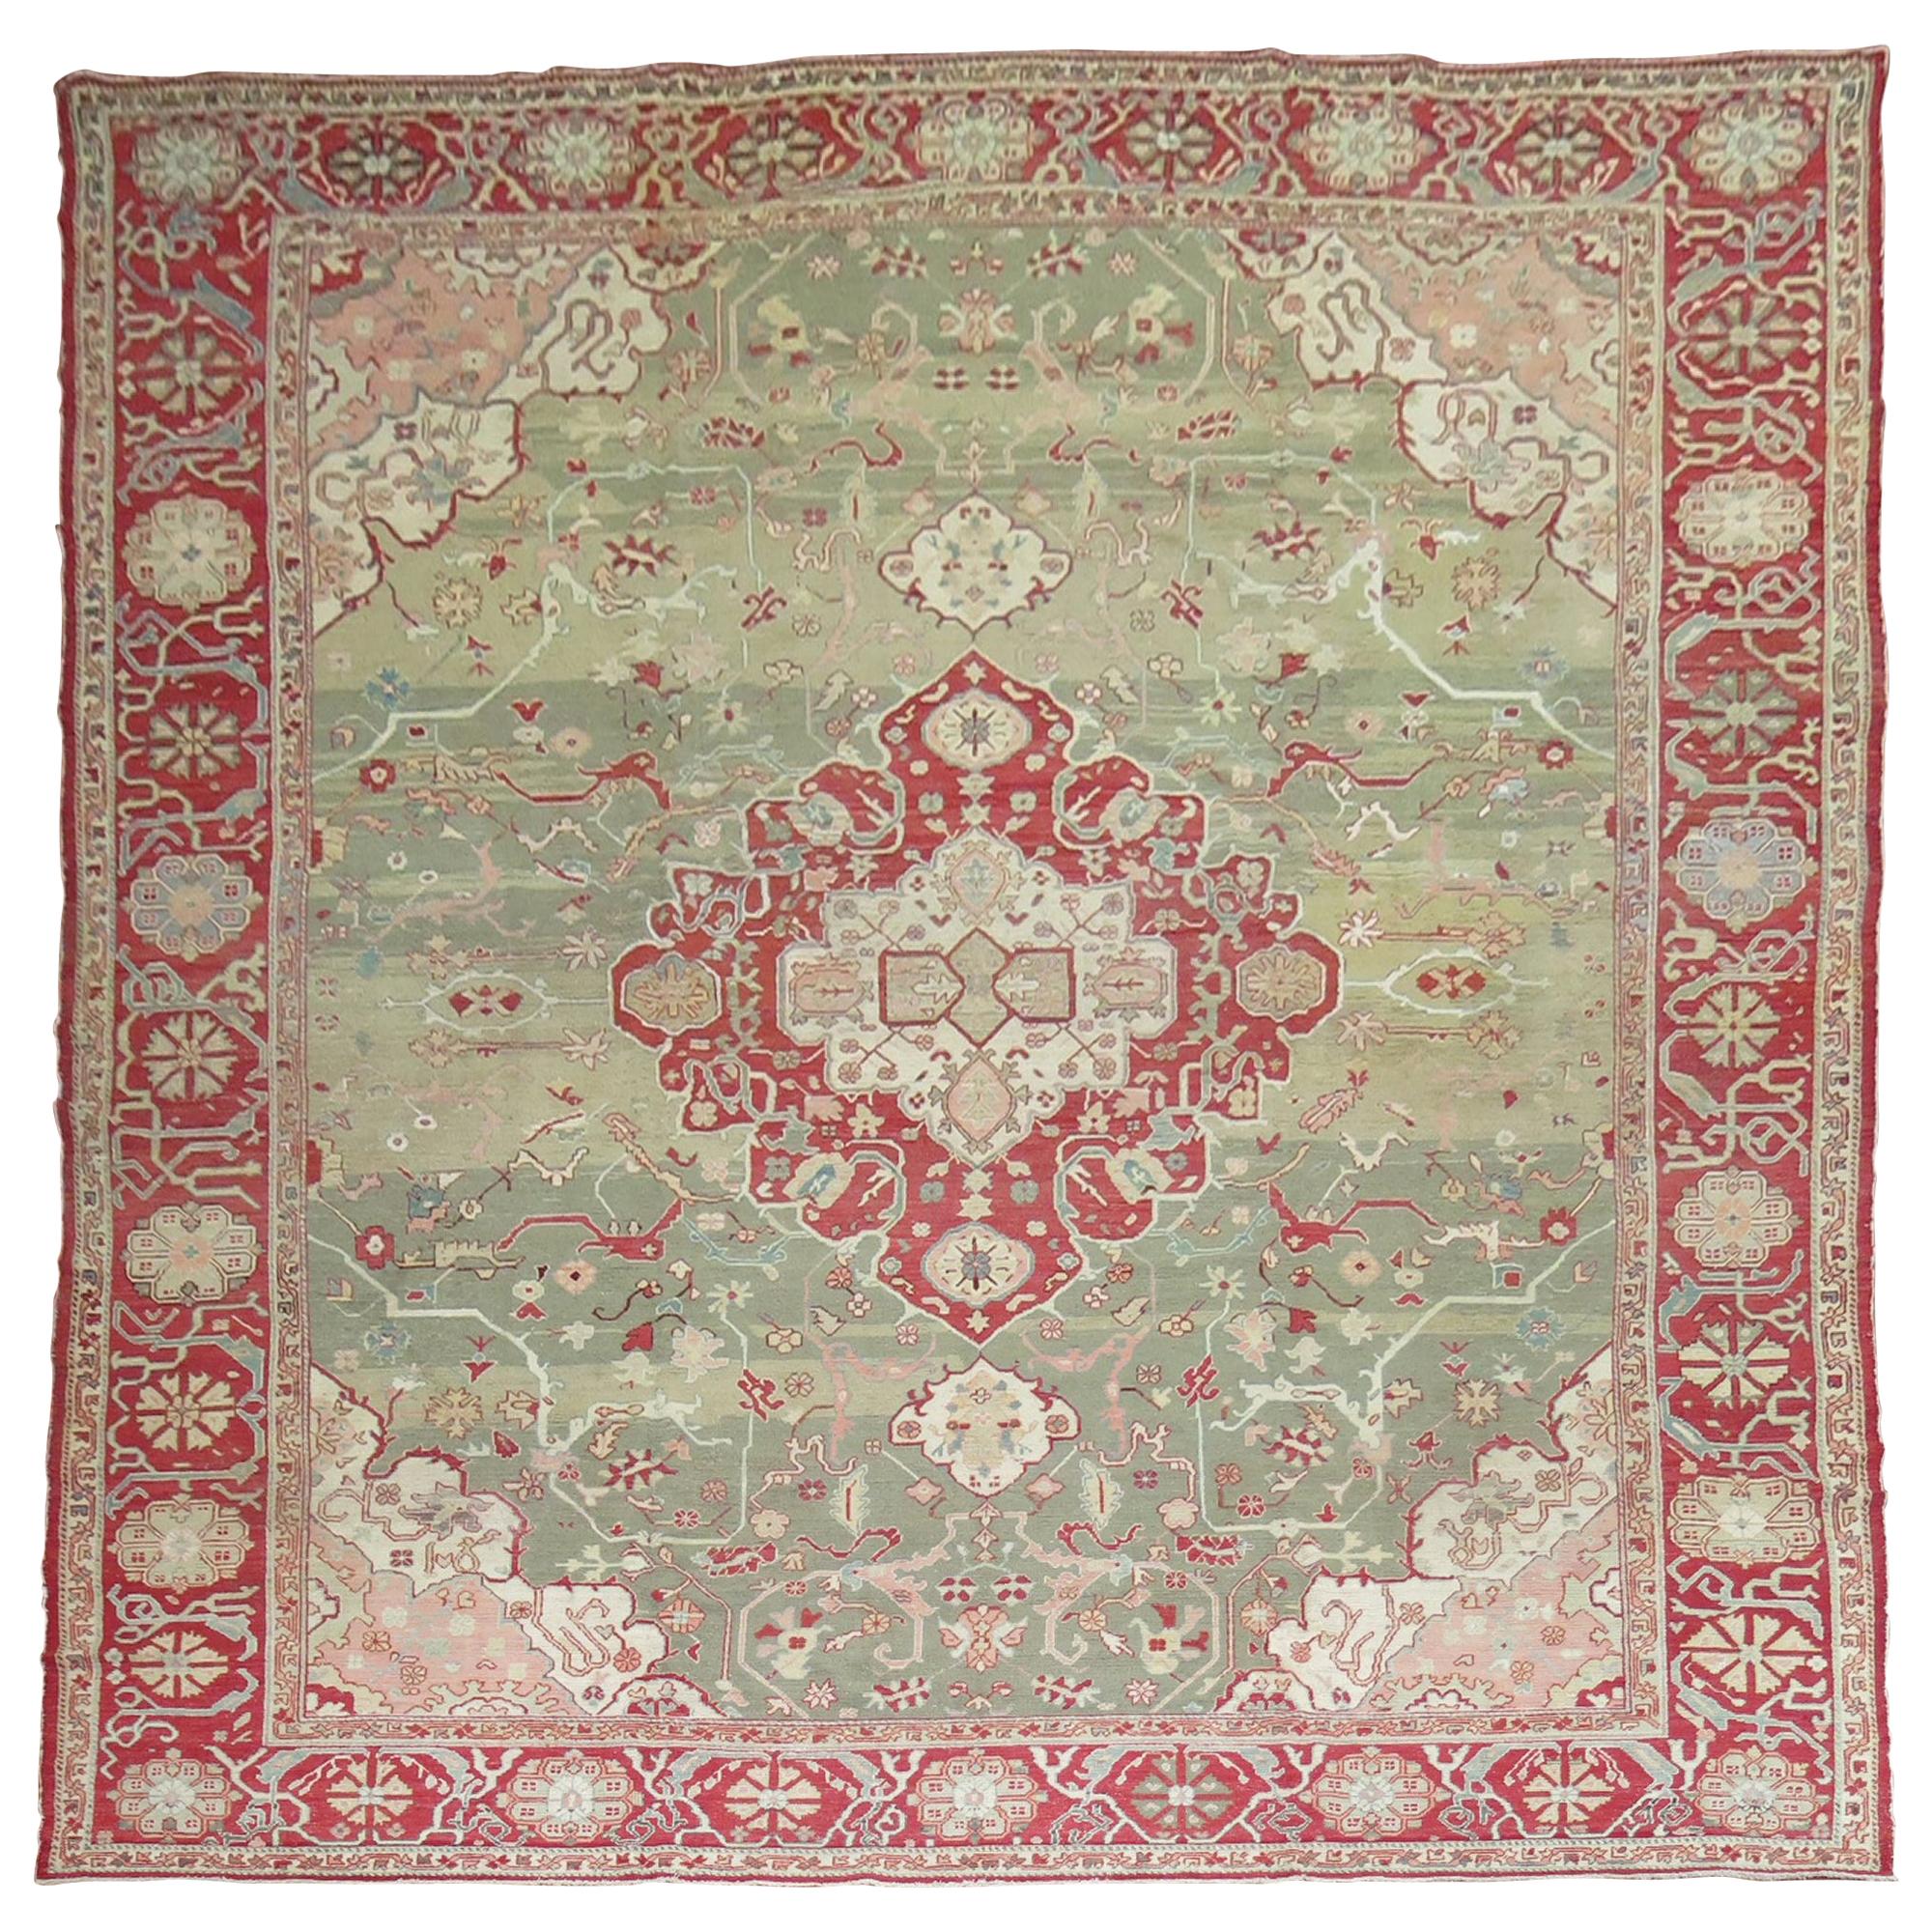 Forest Green Antique Turkish Oushak Carpet